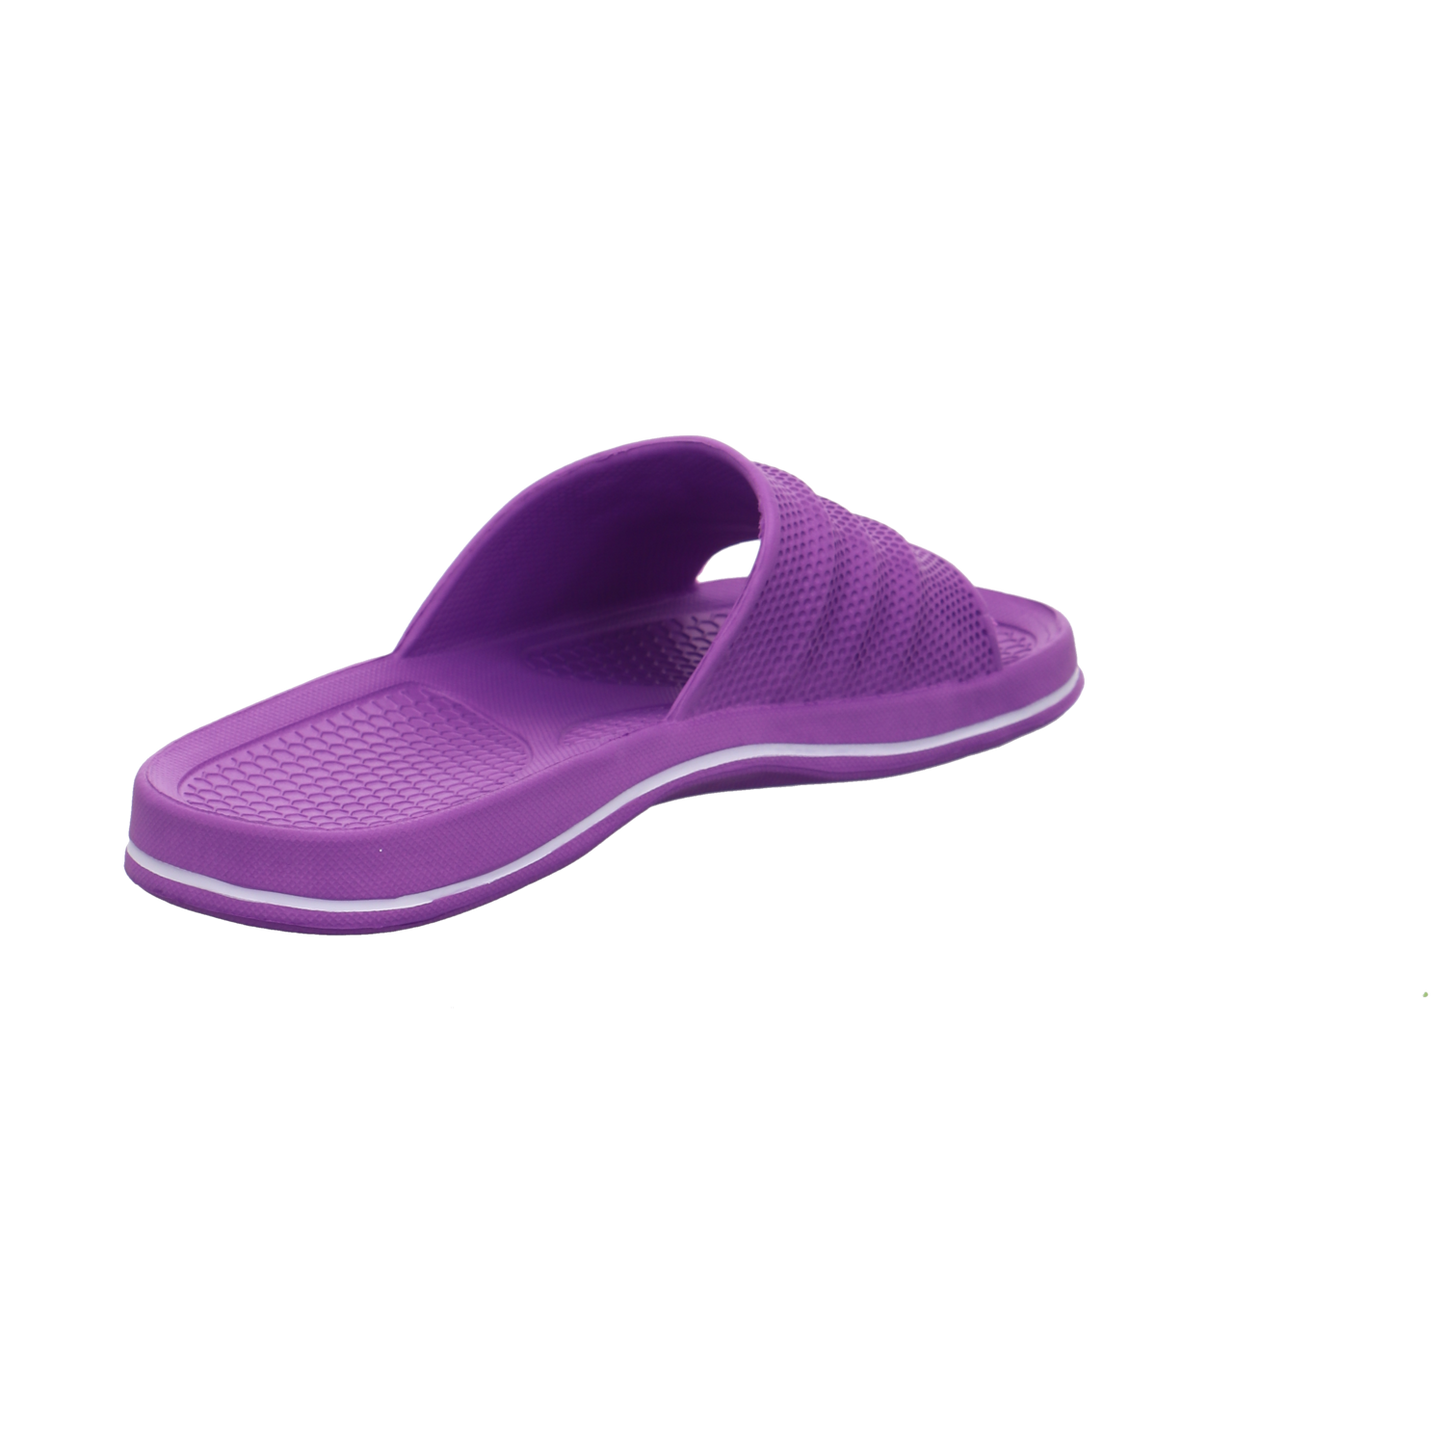 Sprint Schuhe  viola lila Bild5